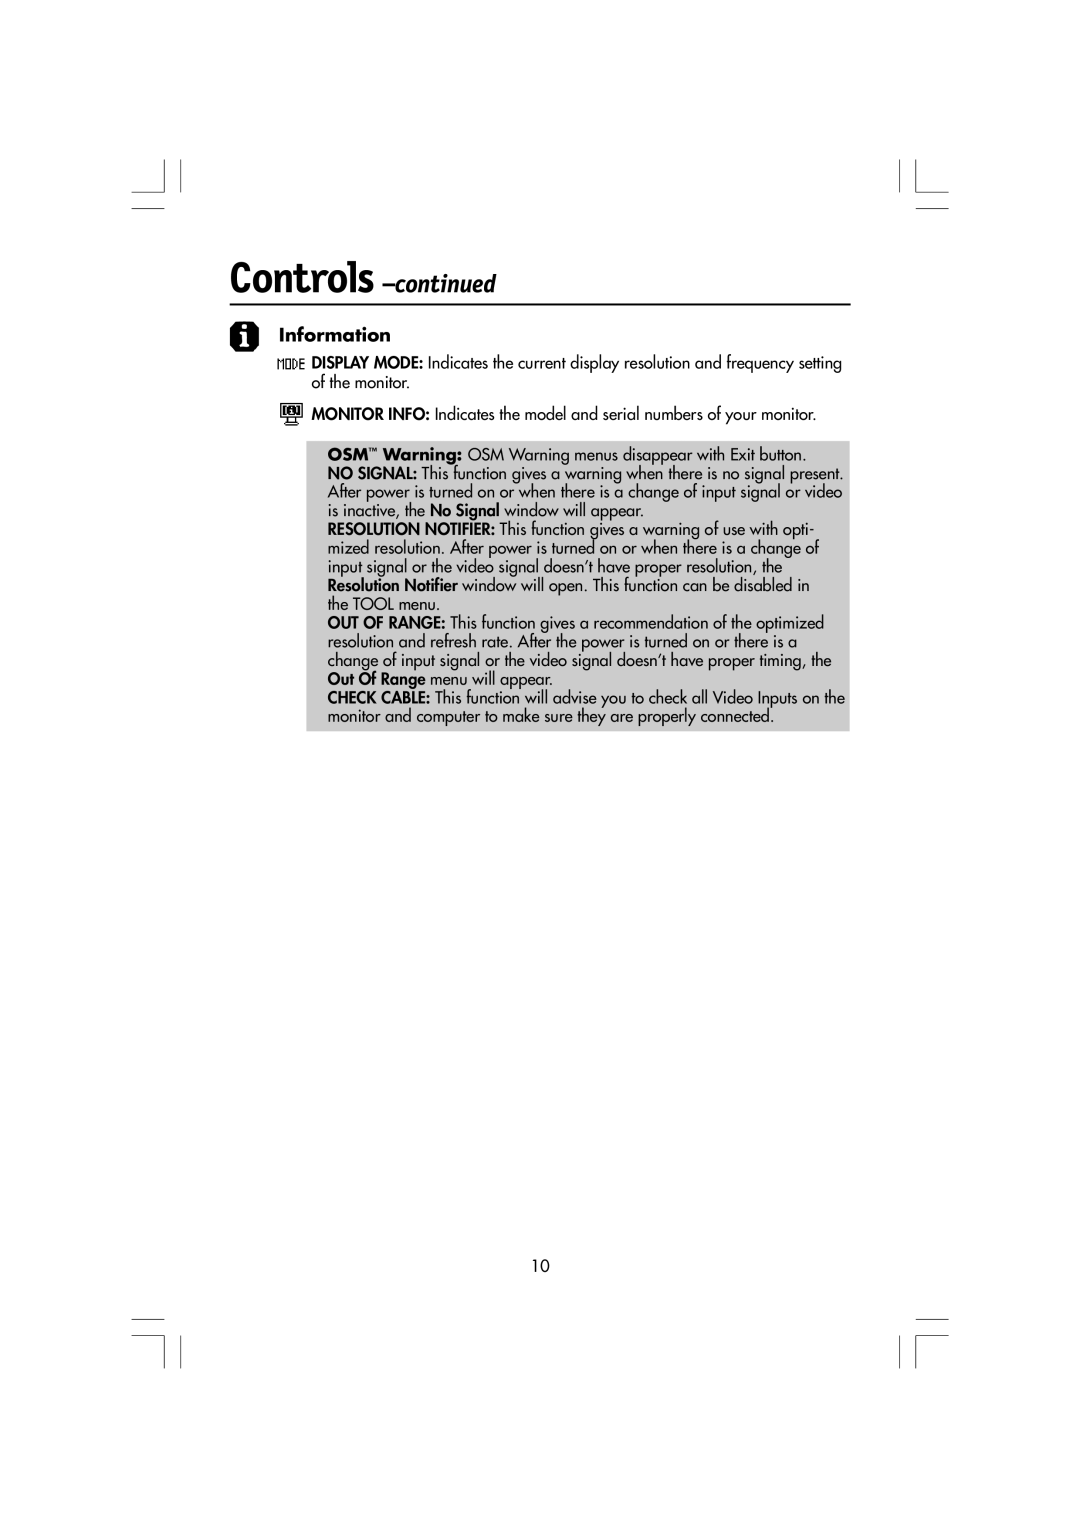 Mitsubishi Electronics LCD1720M manual Controls -continued, Information 